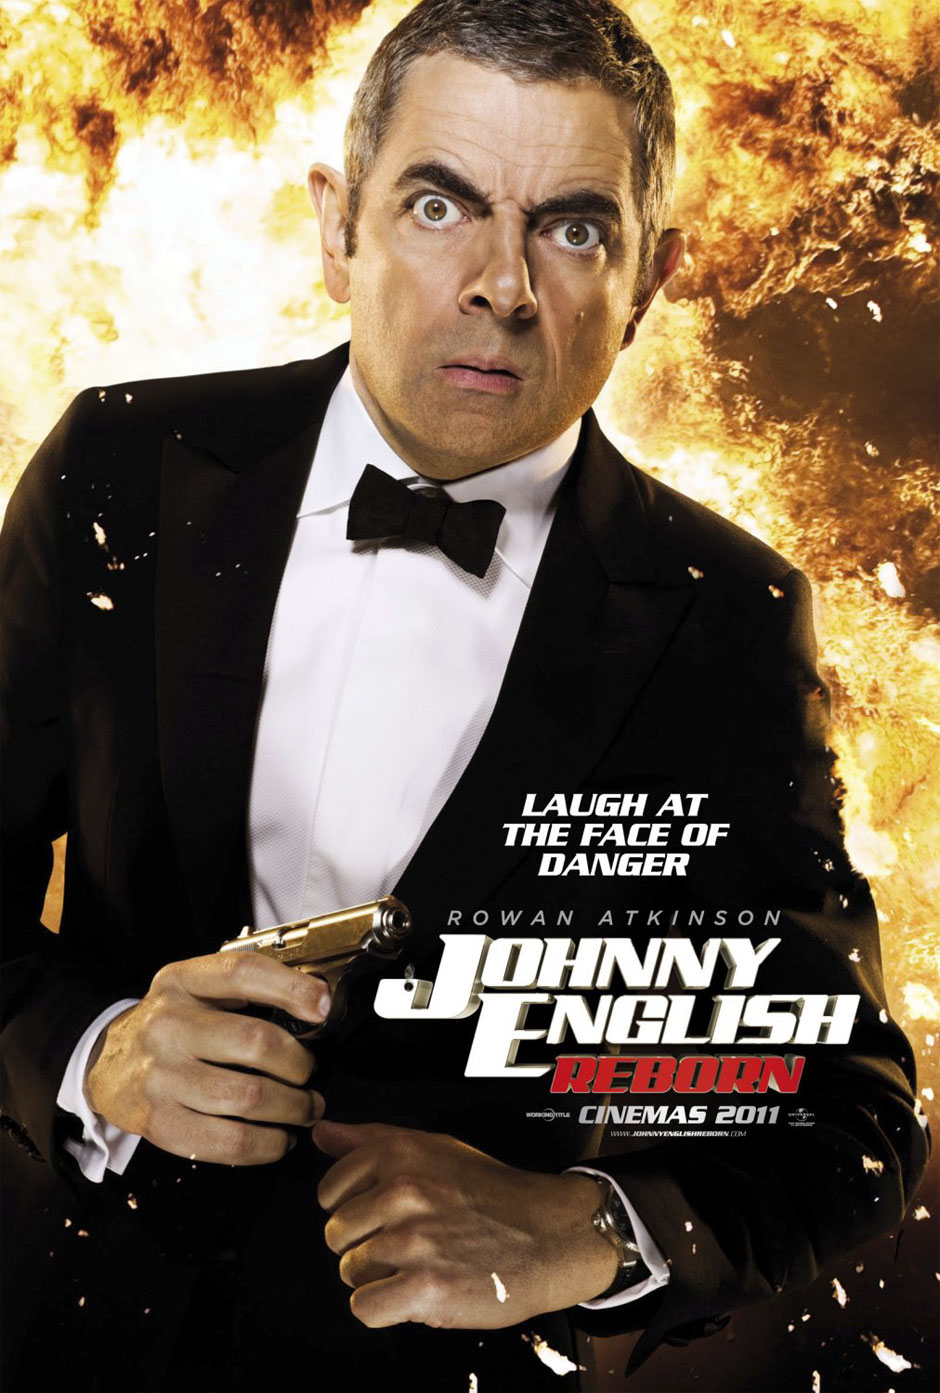 Johnny English Reborn movie